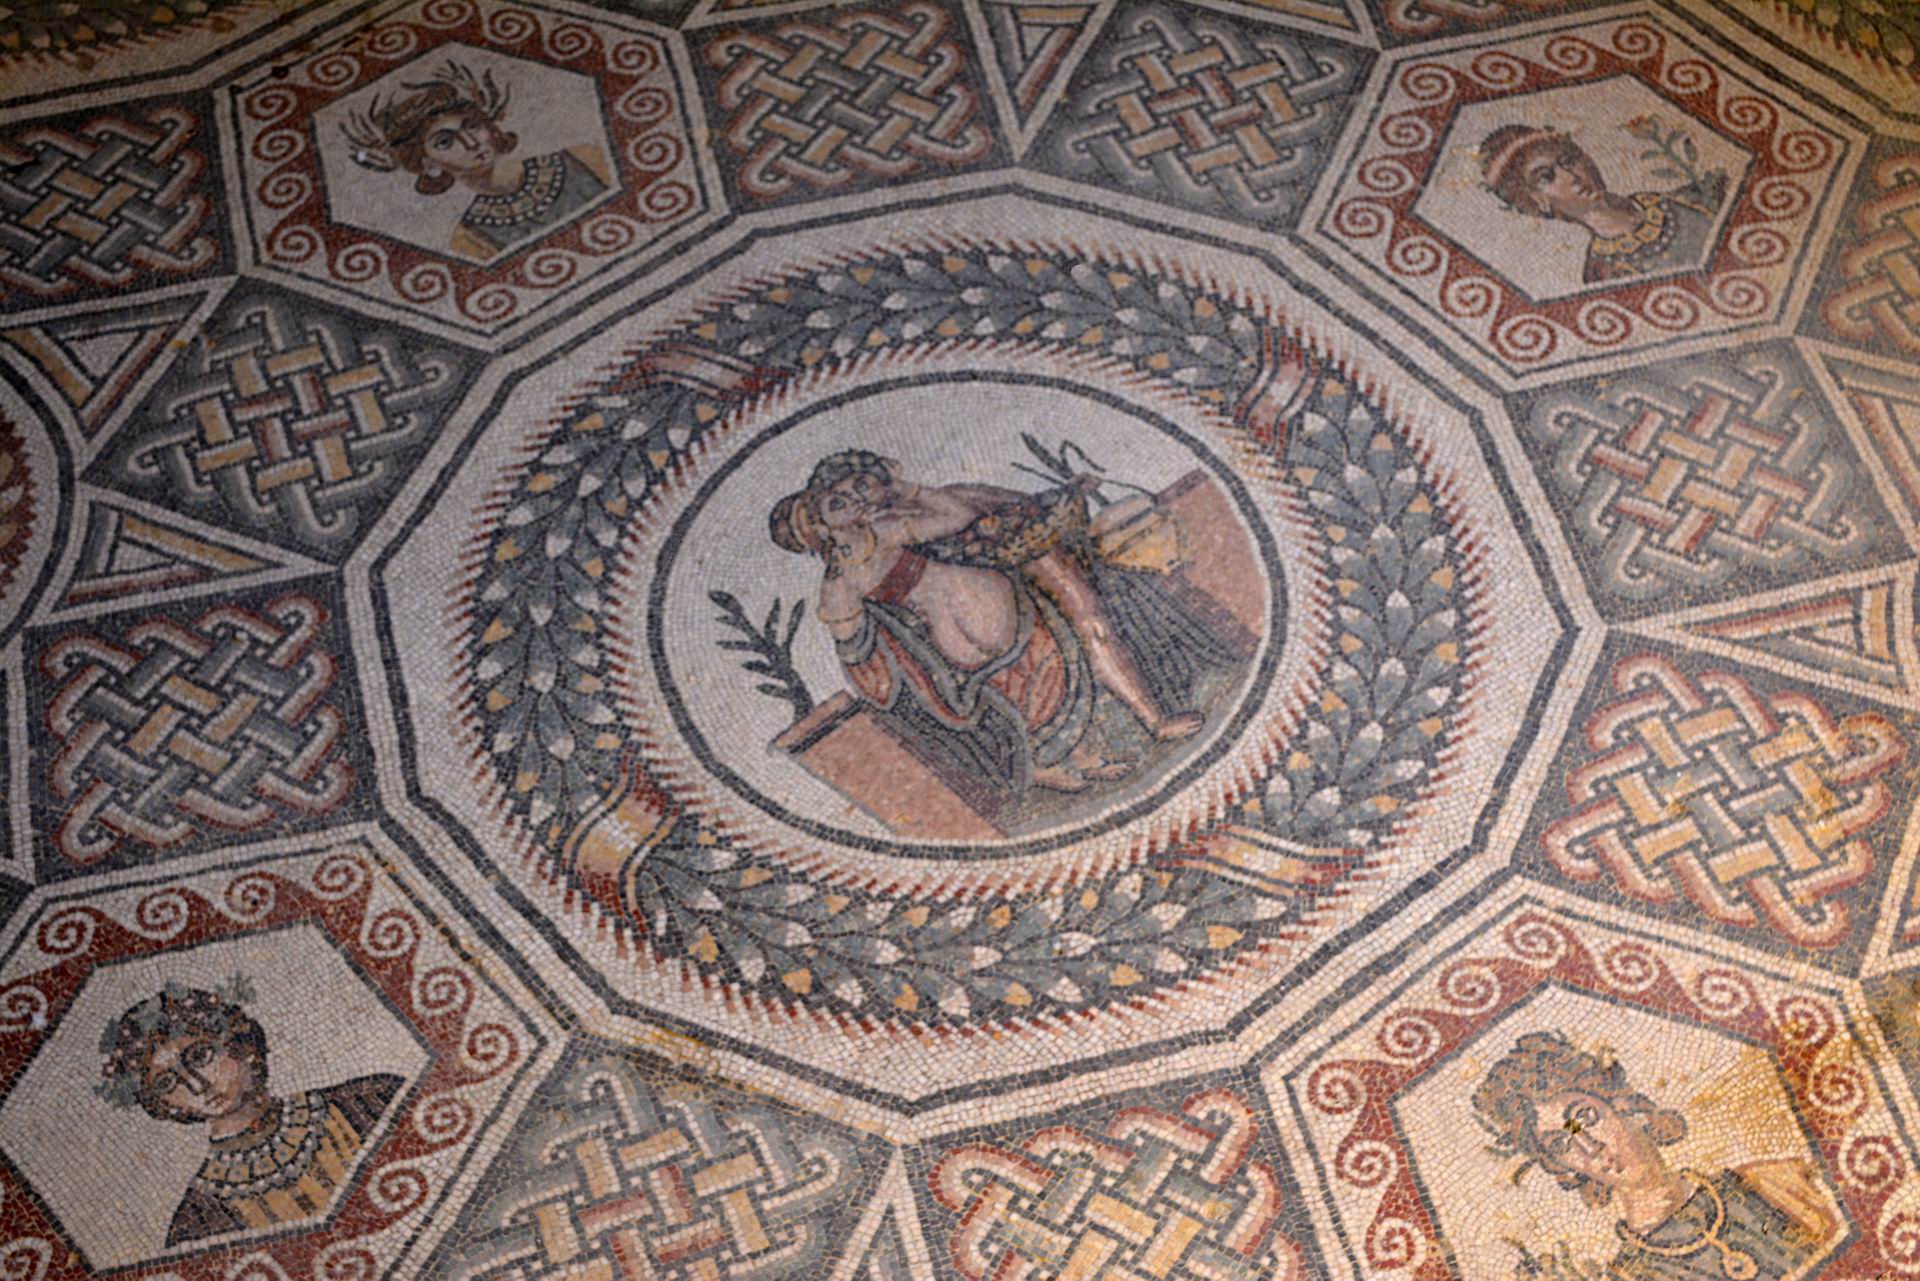 mosaics-in-Piazza-Armerina.jpg